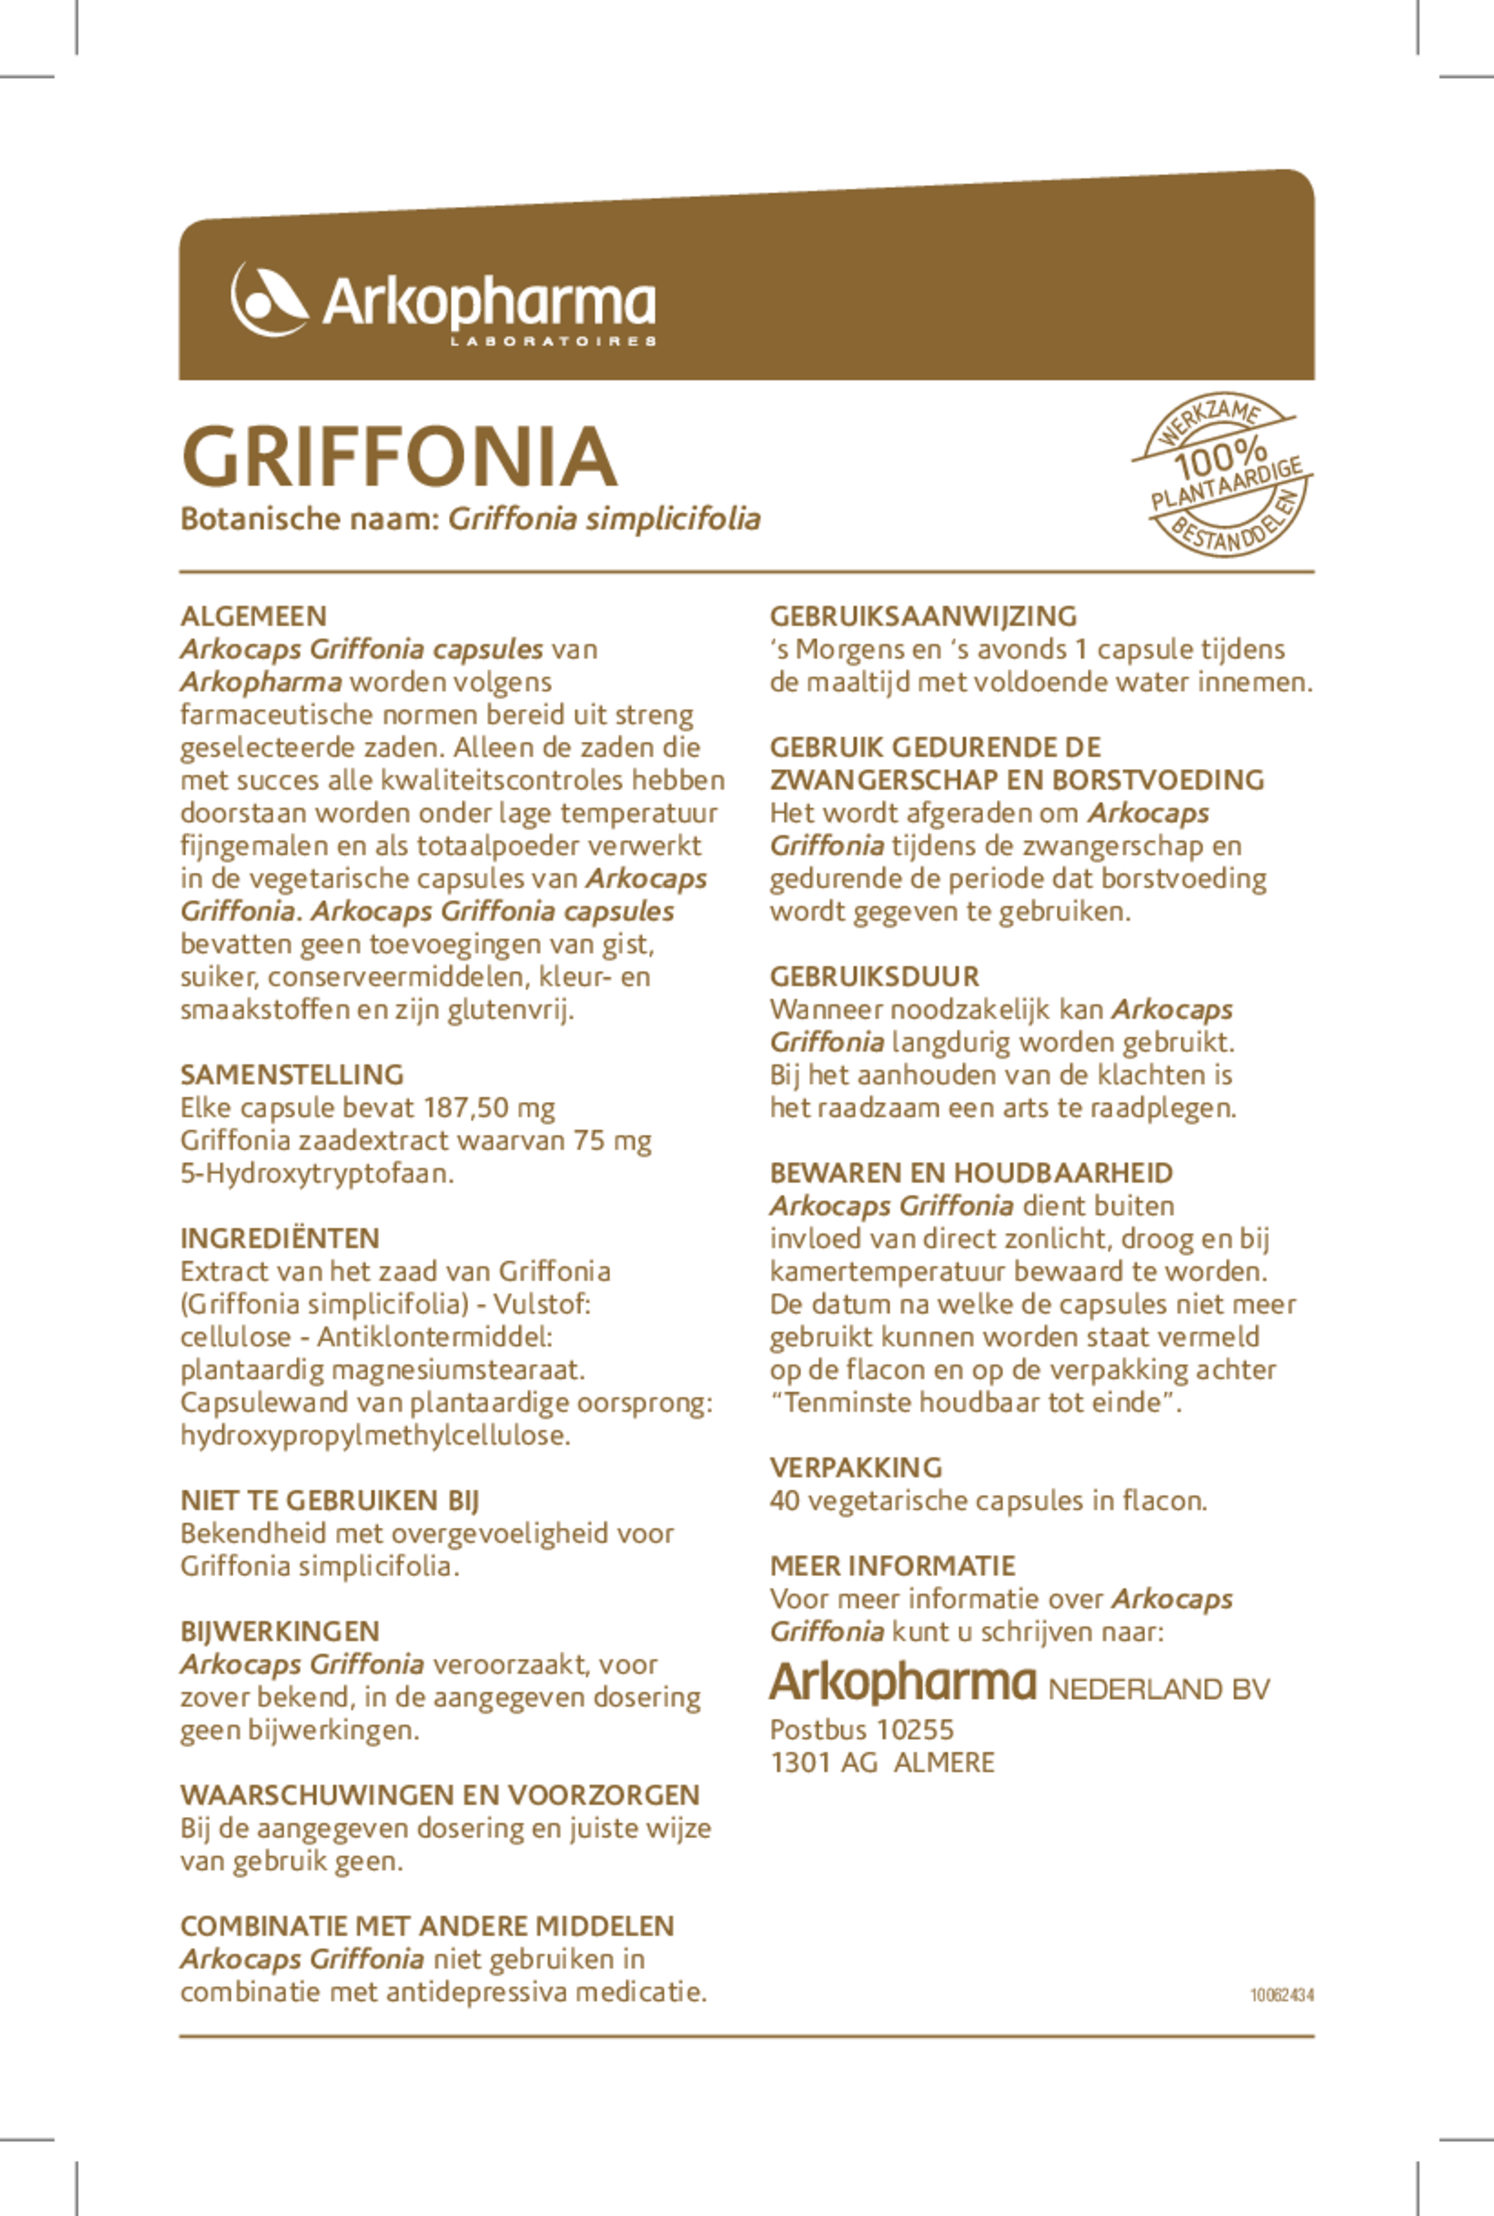 Griffonia Capsules afbeelding van document #1, gebruiksaanwijzing